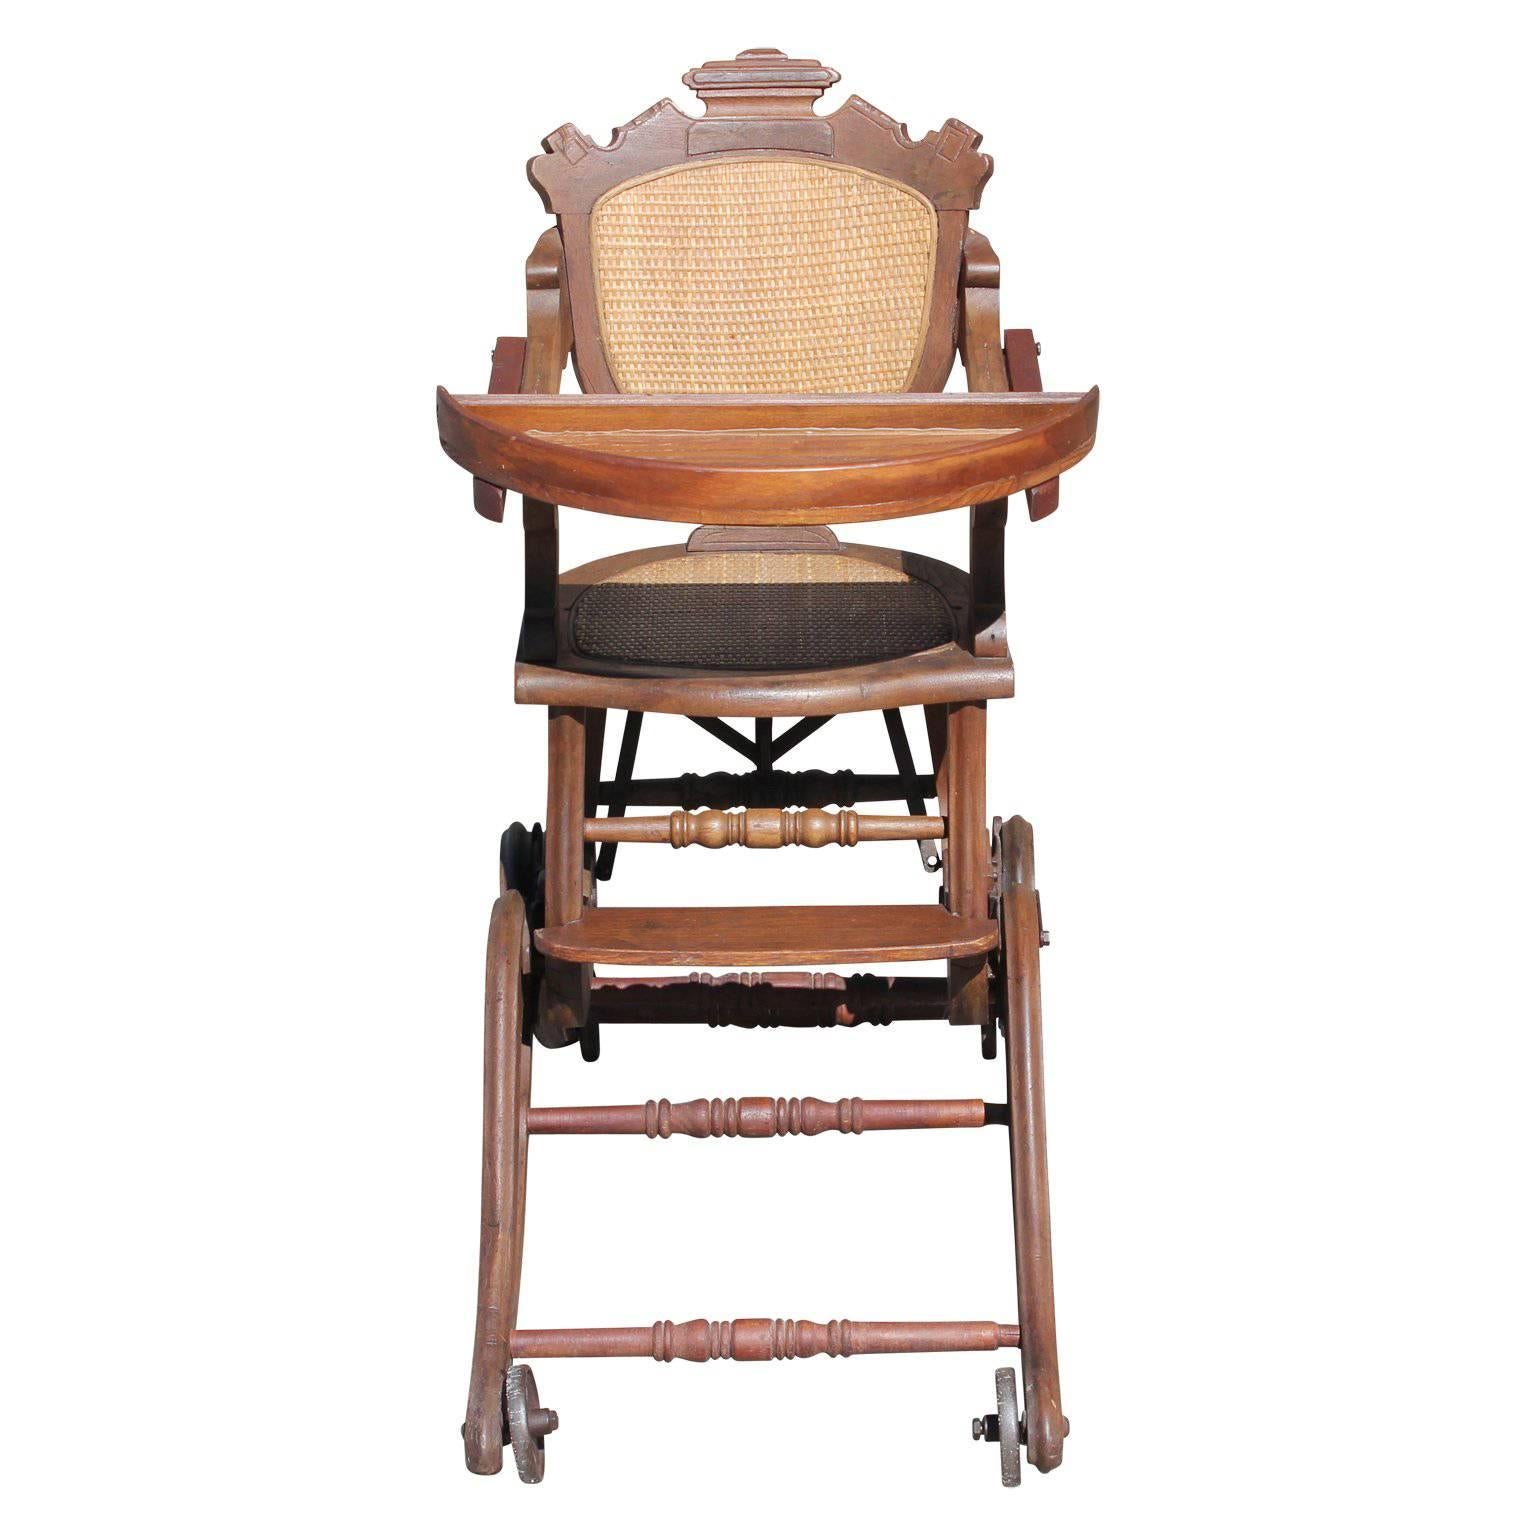 1880s American Victorian Walnut and Cane Metamorphic Highchair on Wheels